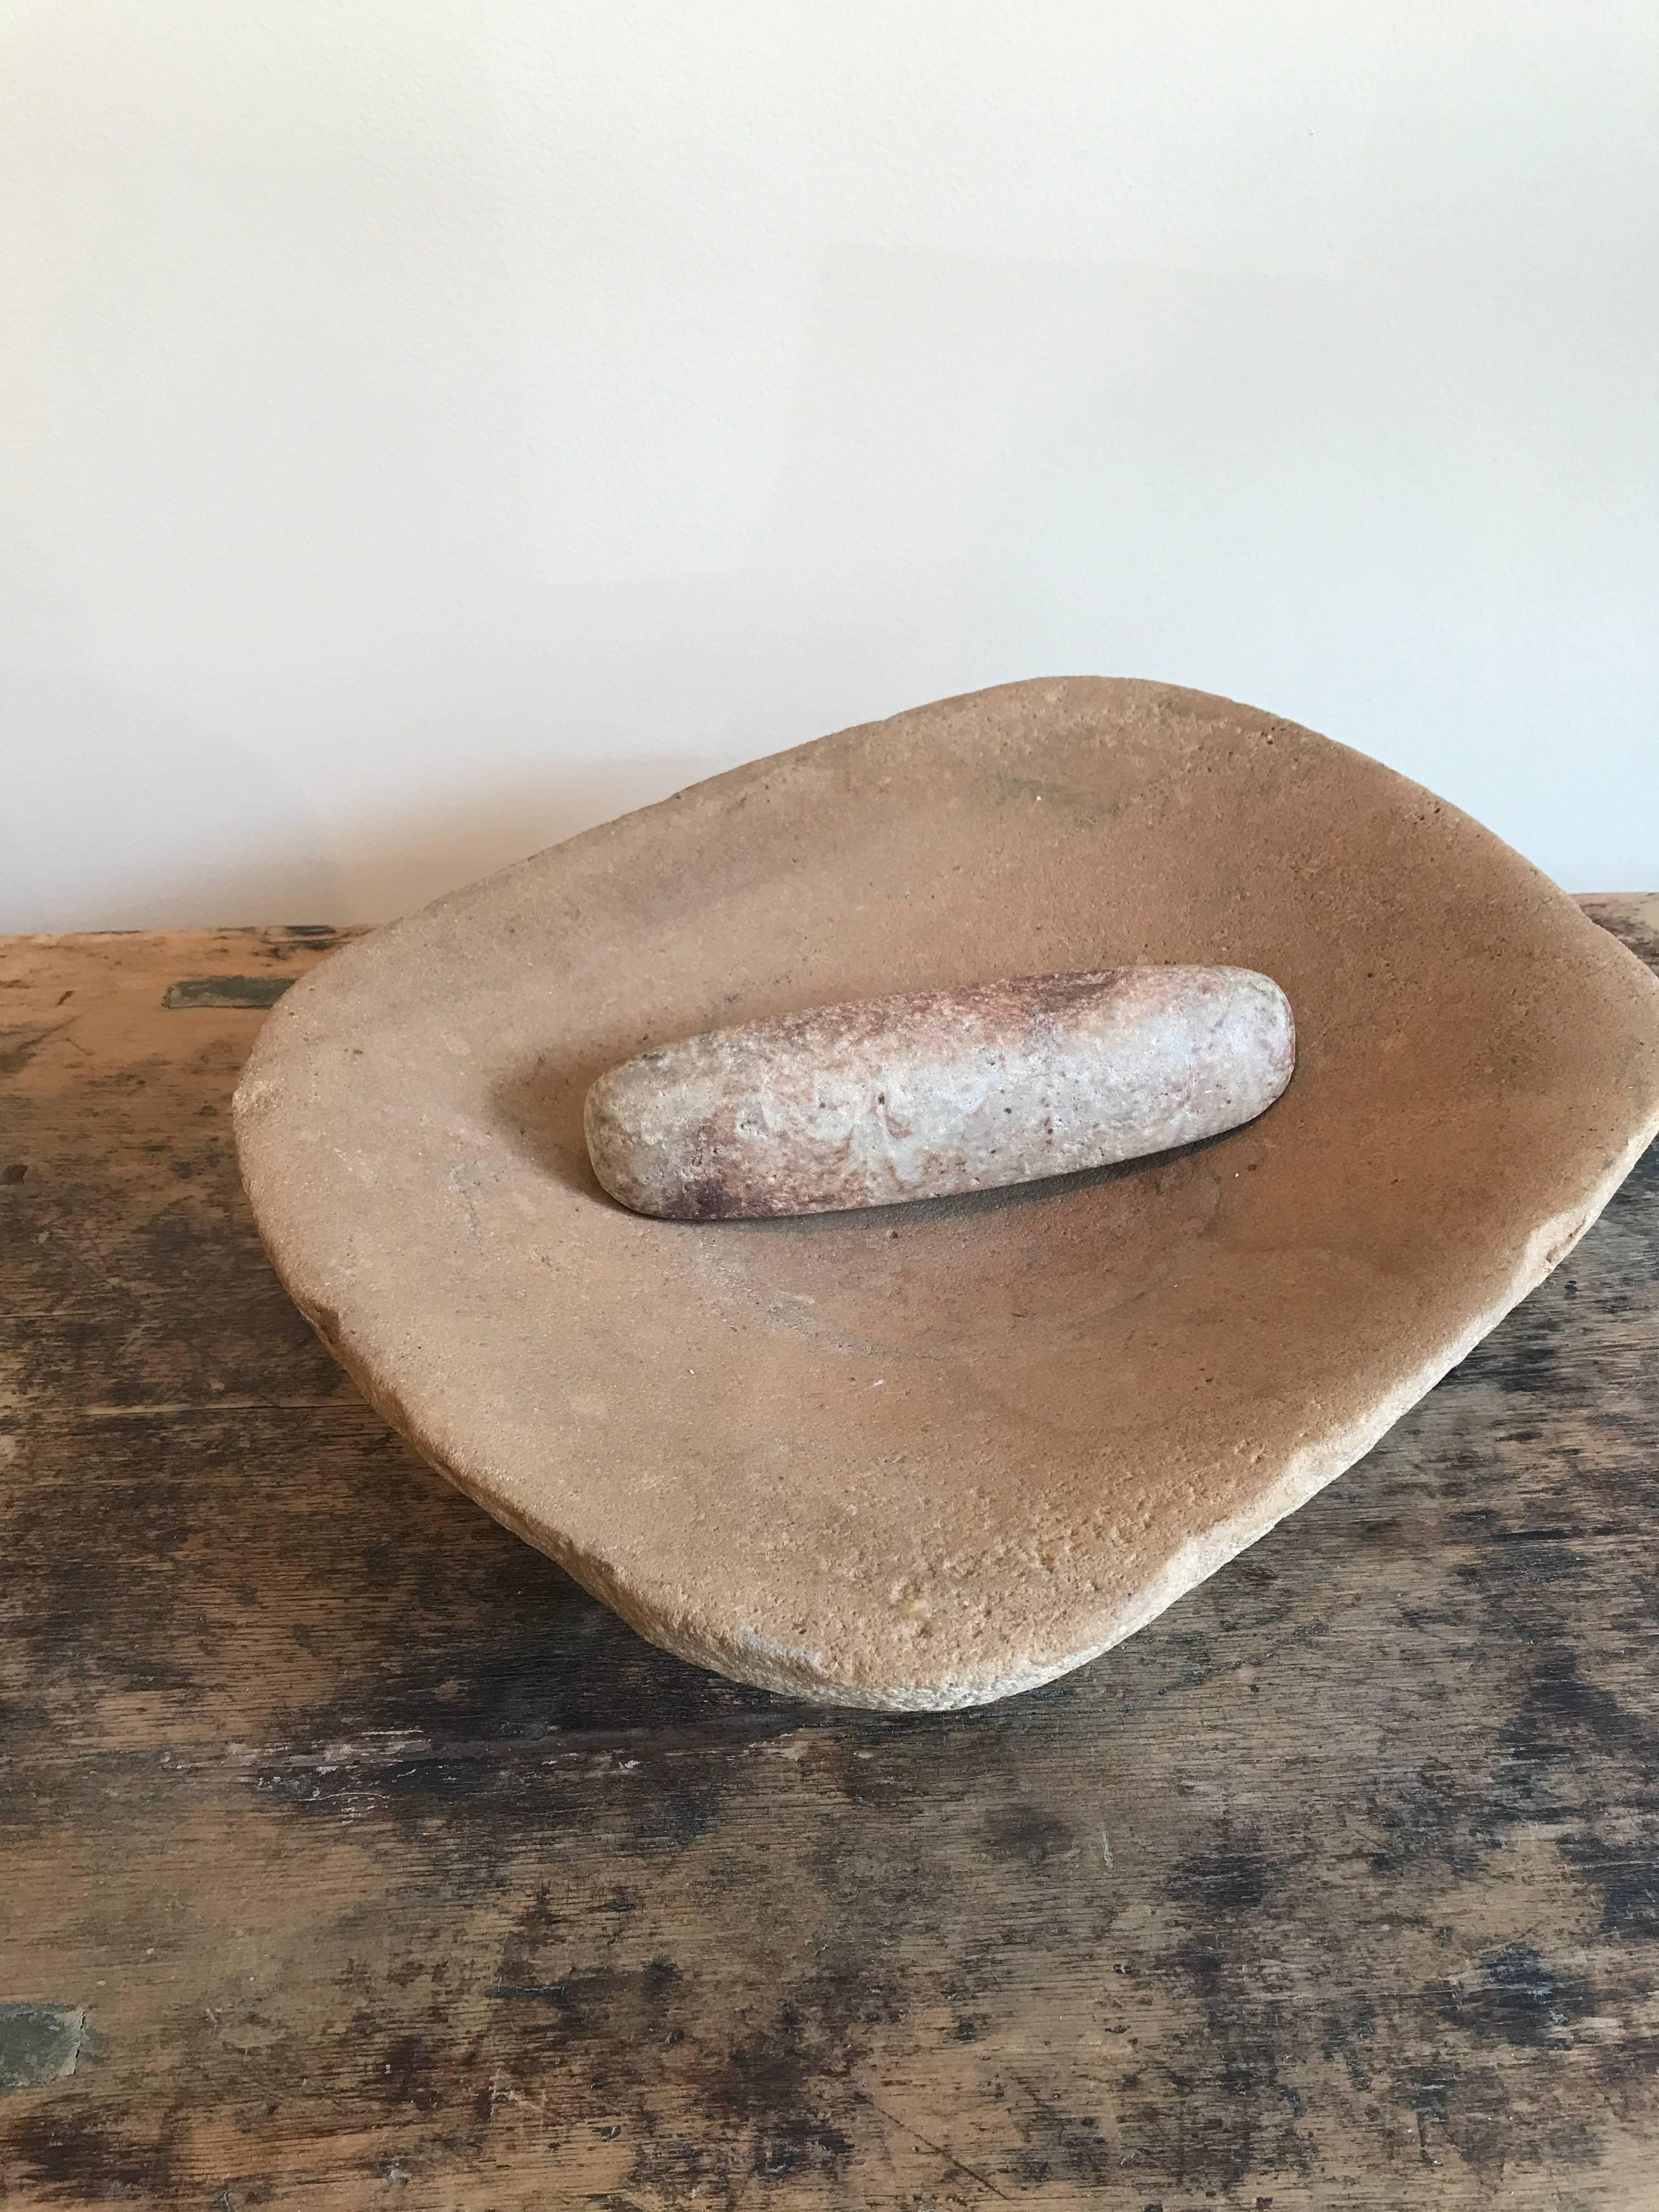 native american stone bowls